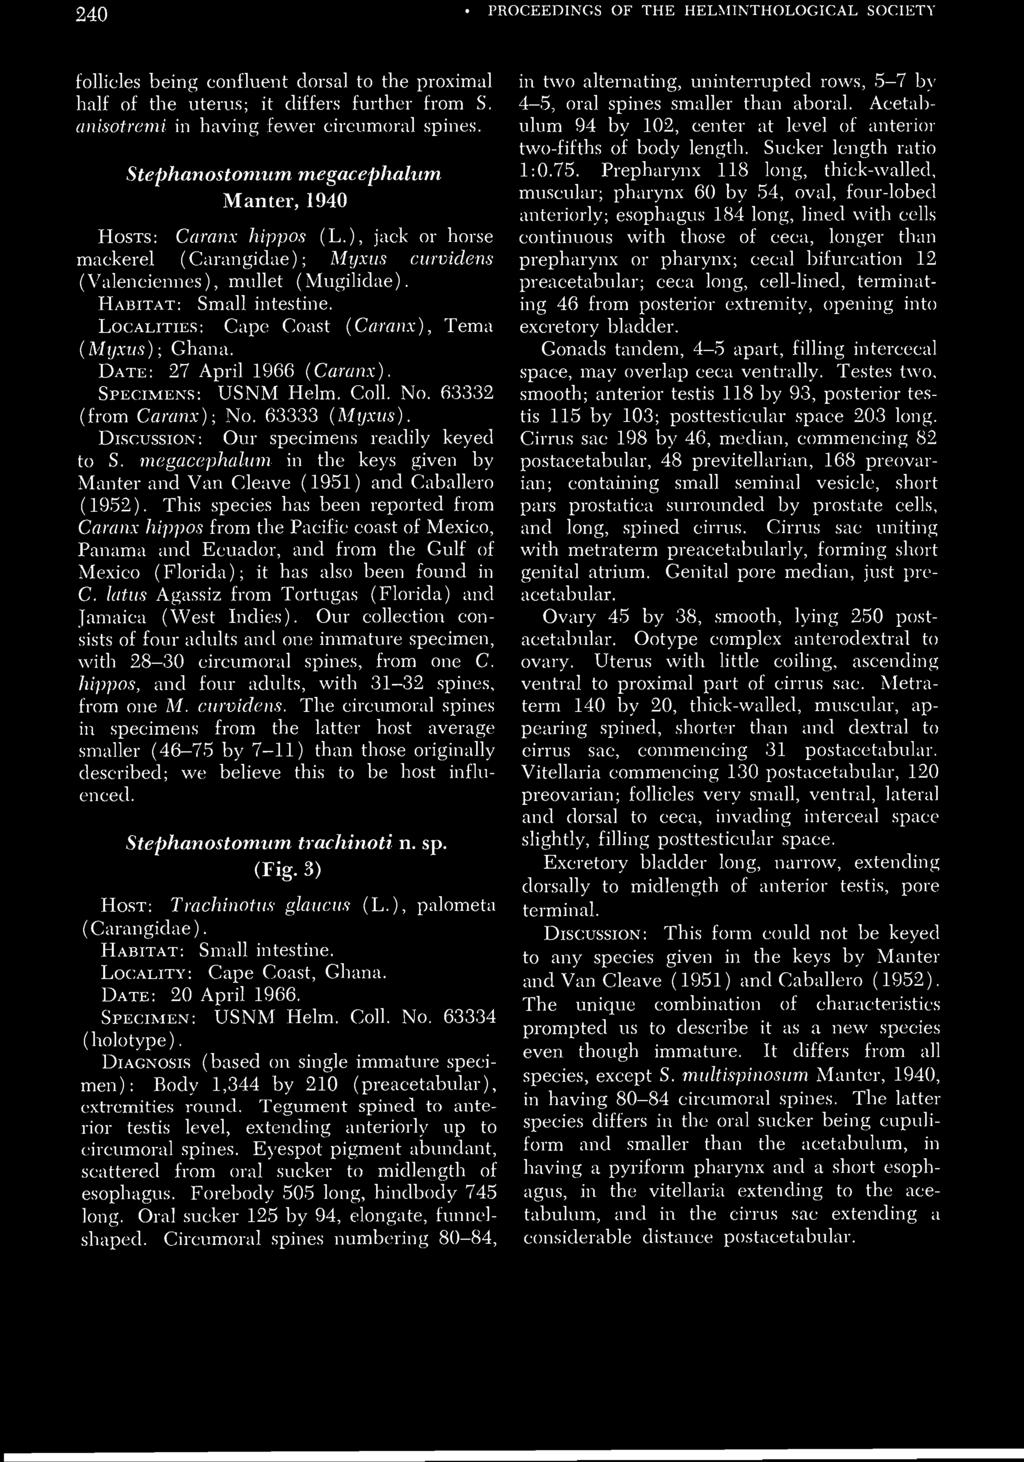 LOCALITIES: Cape Coast (Caranx), Tema (Myxus); Ghana. DATE: 27 April 1966 (Caranx). SPECIMENS: USNM Helm. Coll. No. 63332 (from Caranx); No. 63333 (Myxus).